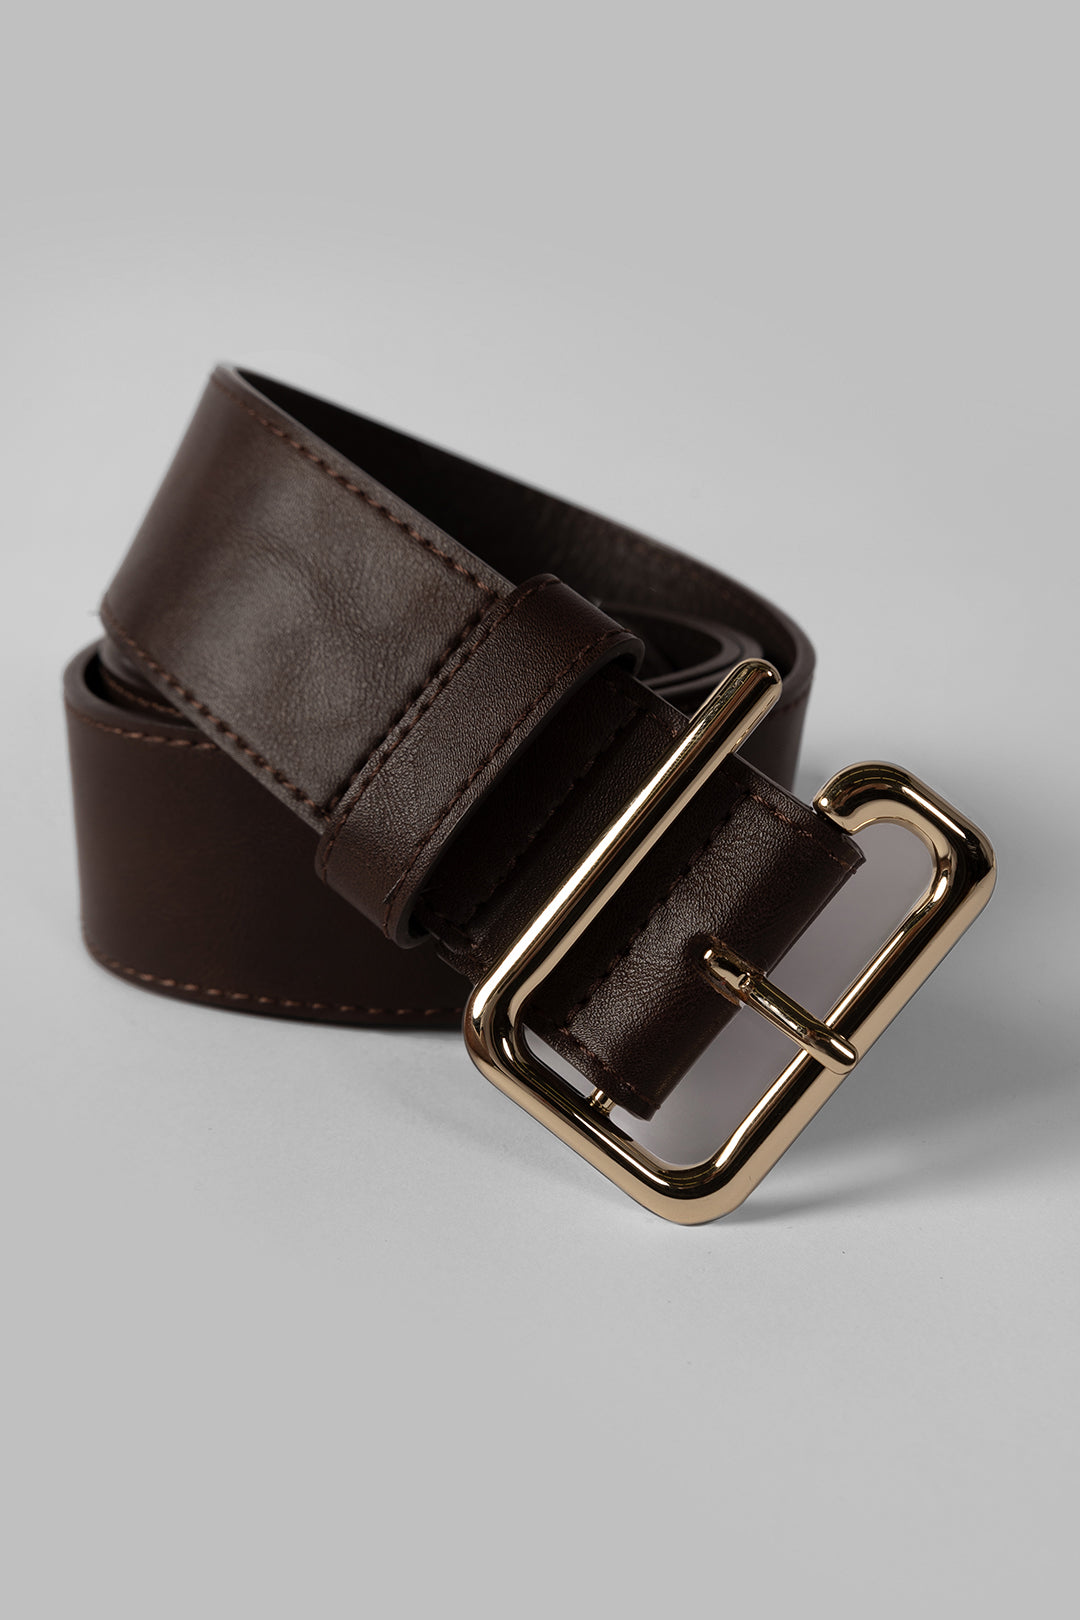 Brown belt with gold buckle | Irish